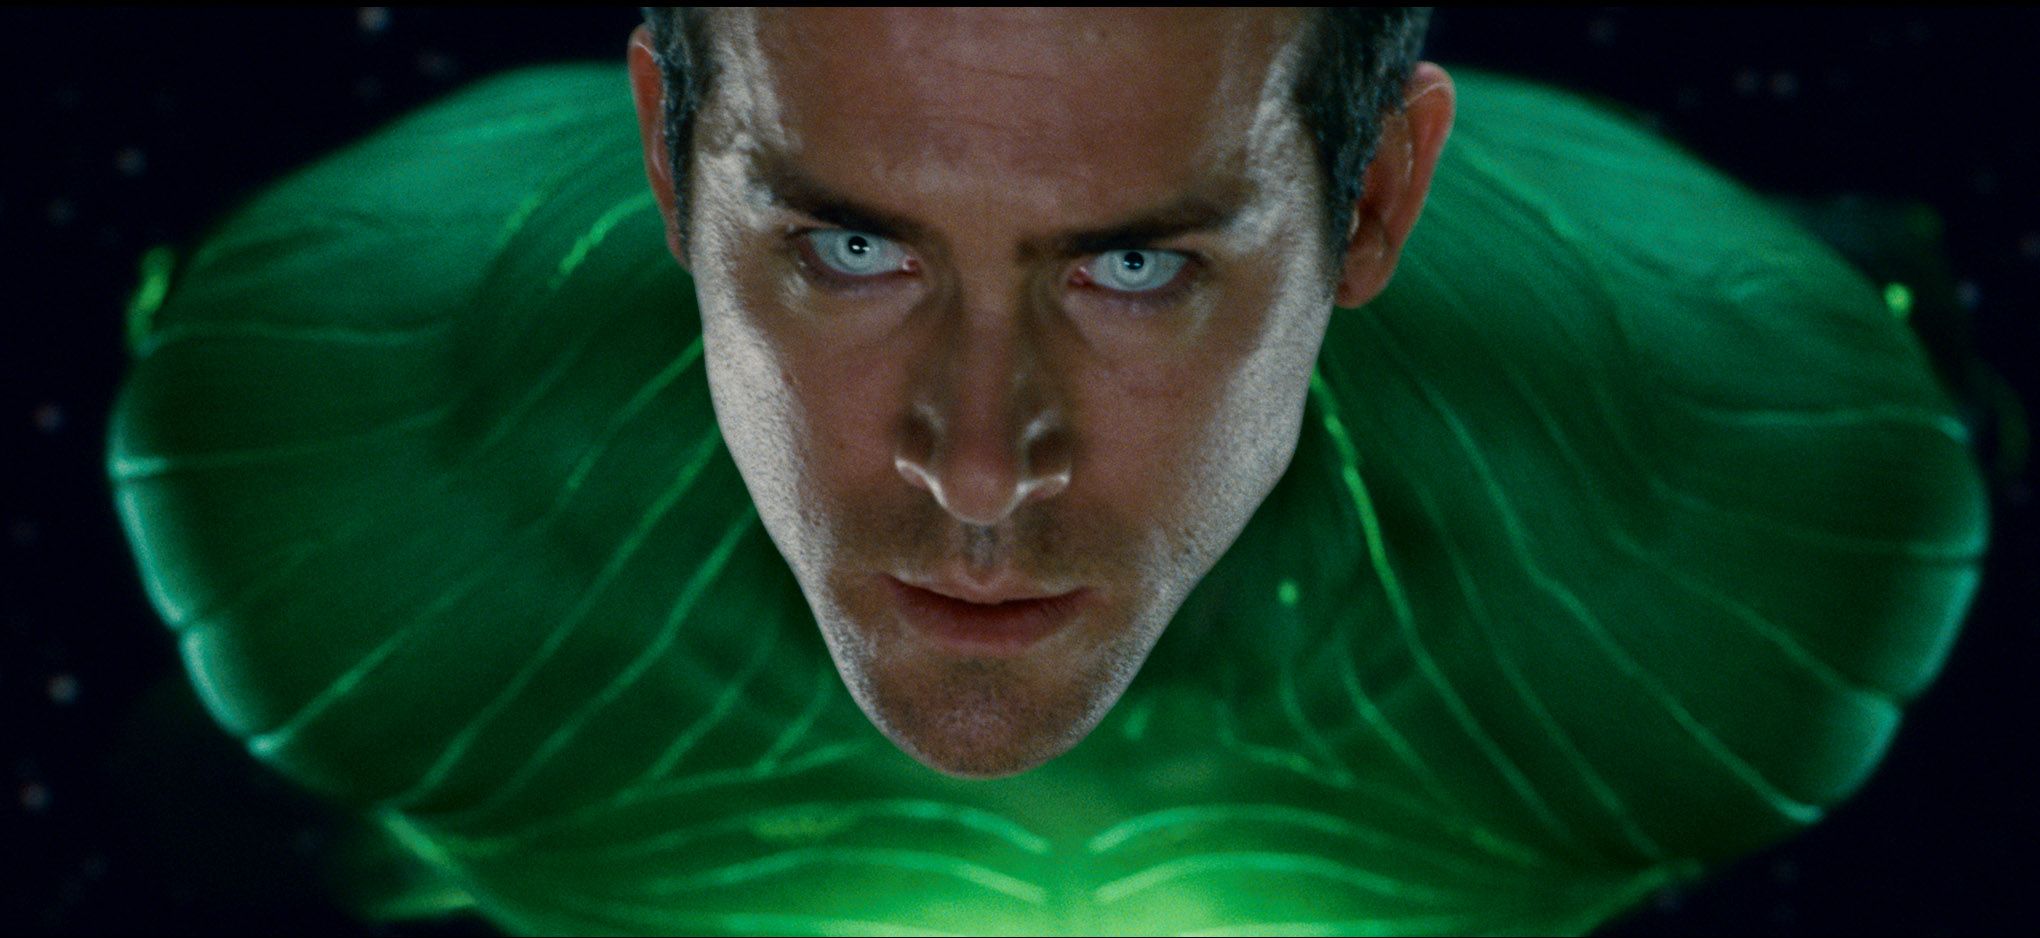 DVD: Green Lantern. The Arts Desk